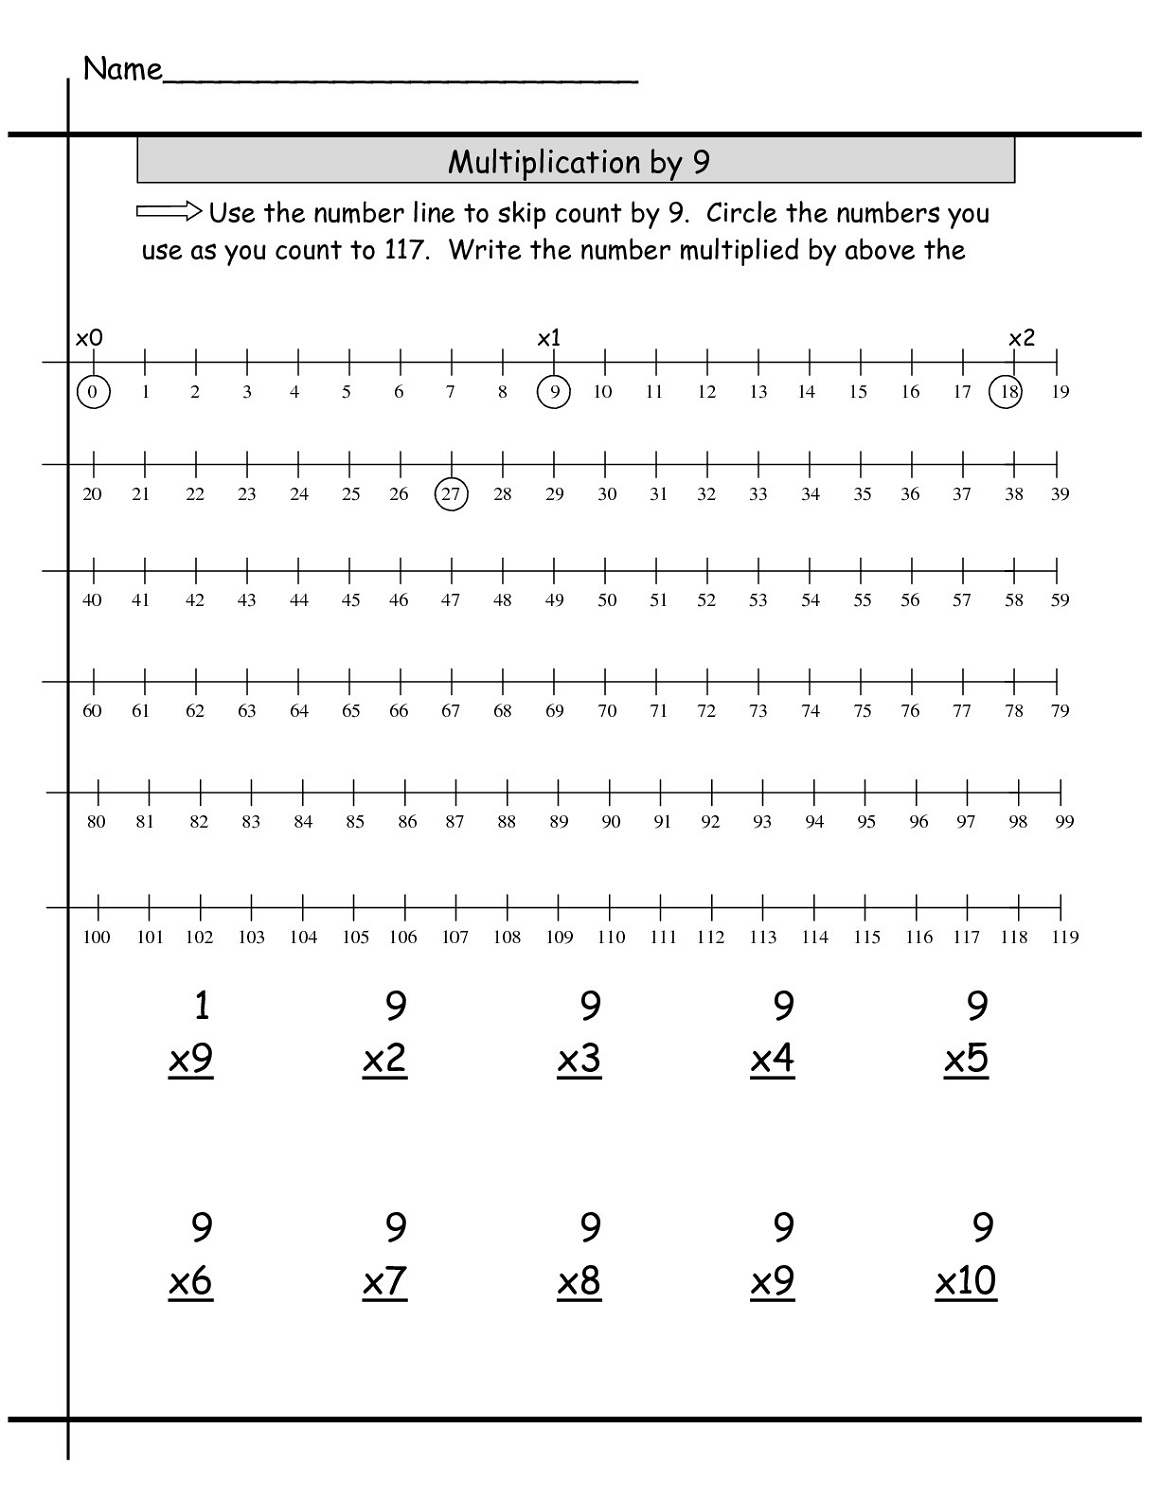 multiply-by-9-worksheet-ruler